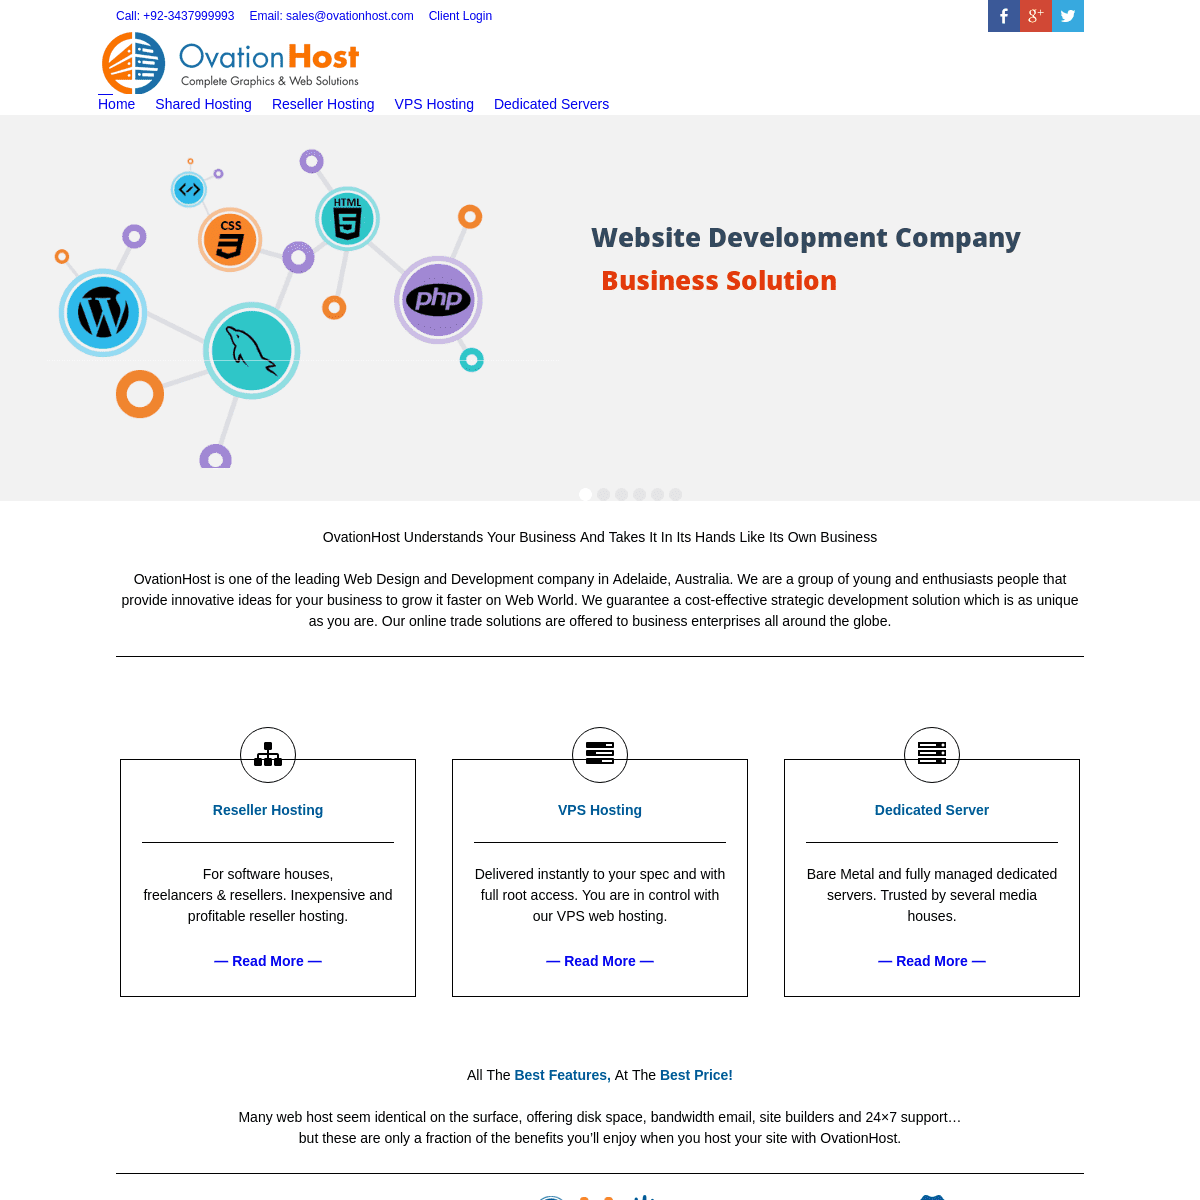 A complete backup of ovationhost.com